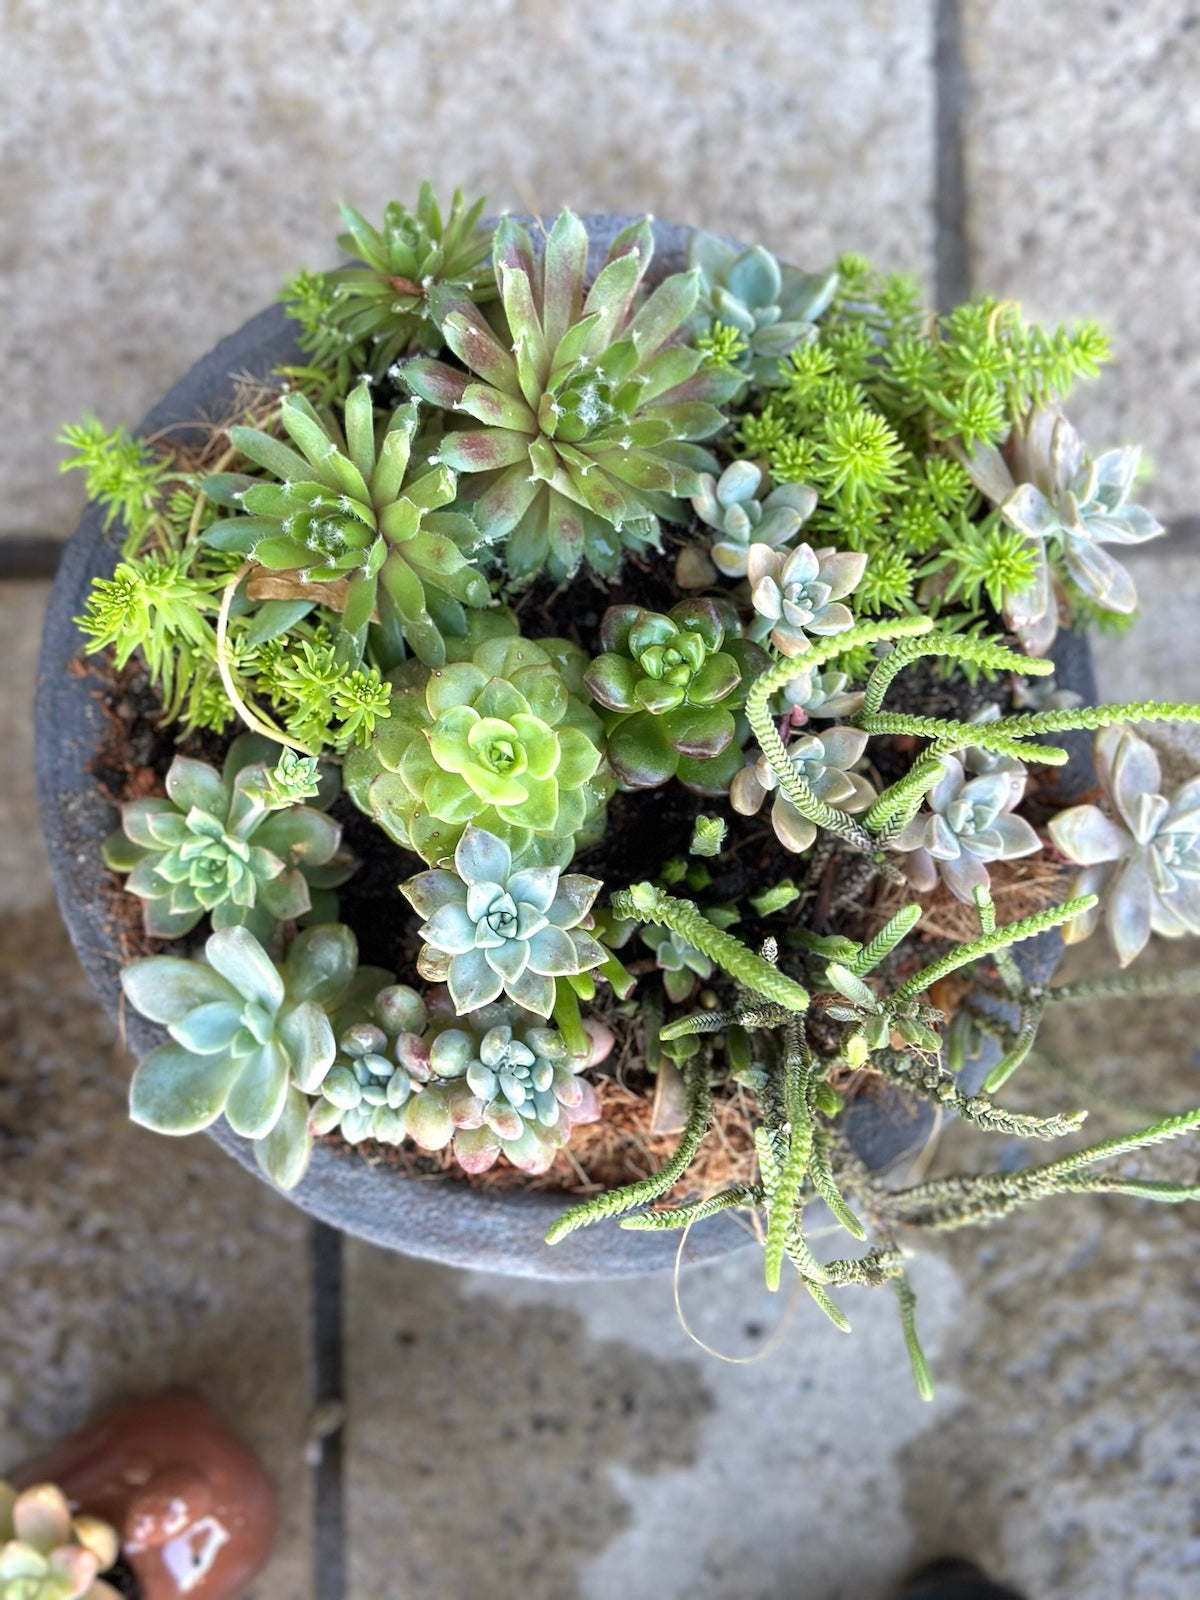 Succulent garden in a ceramic pot small size